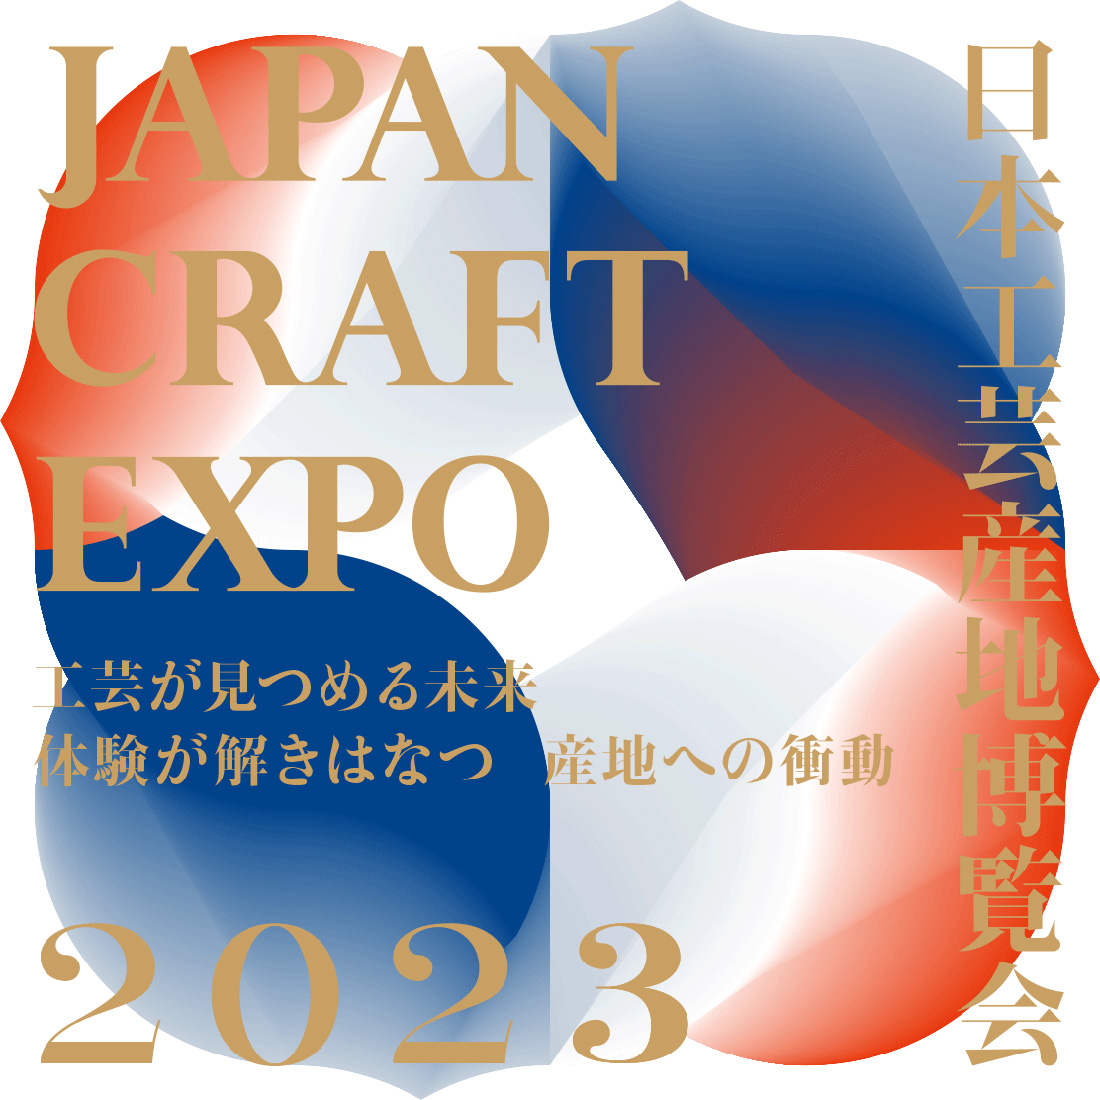 JAPAN CRAFT EXPO 日本工芸産地博覧会2023